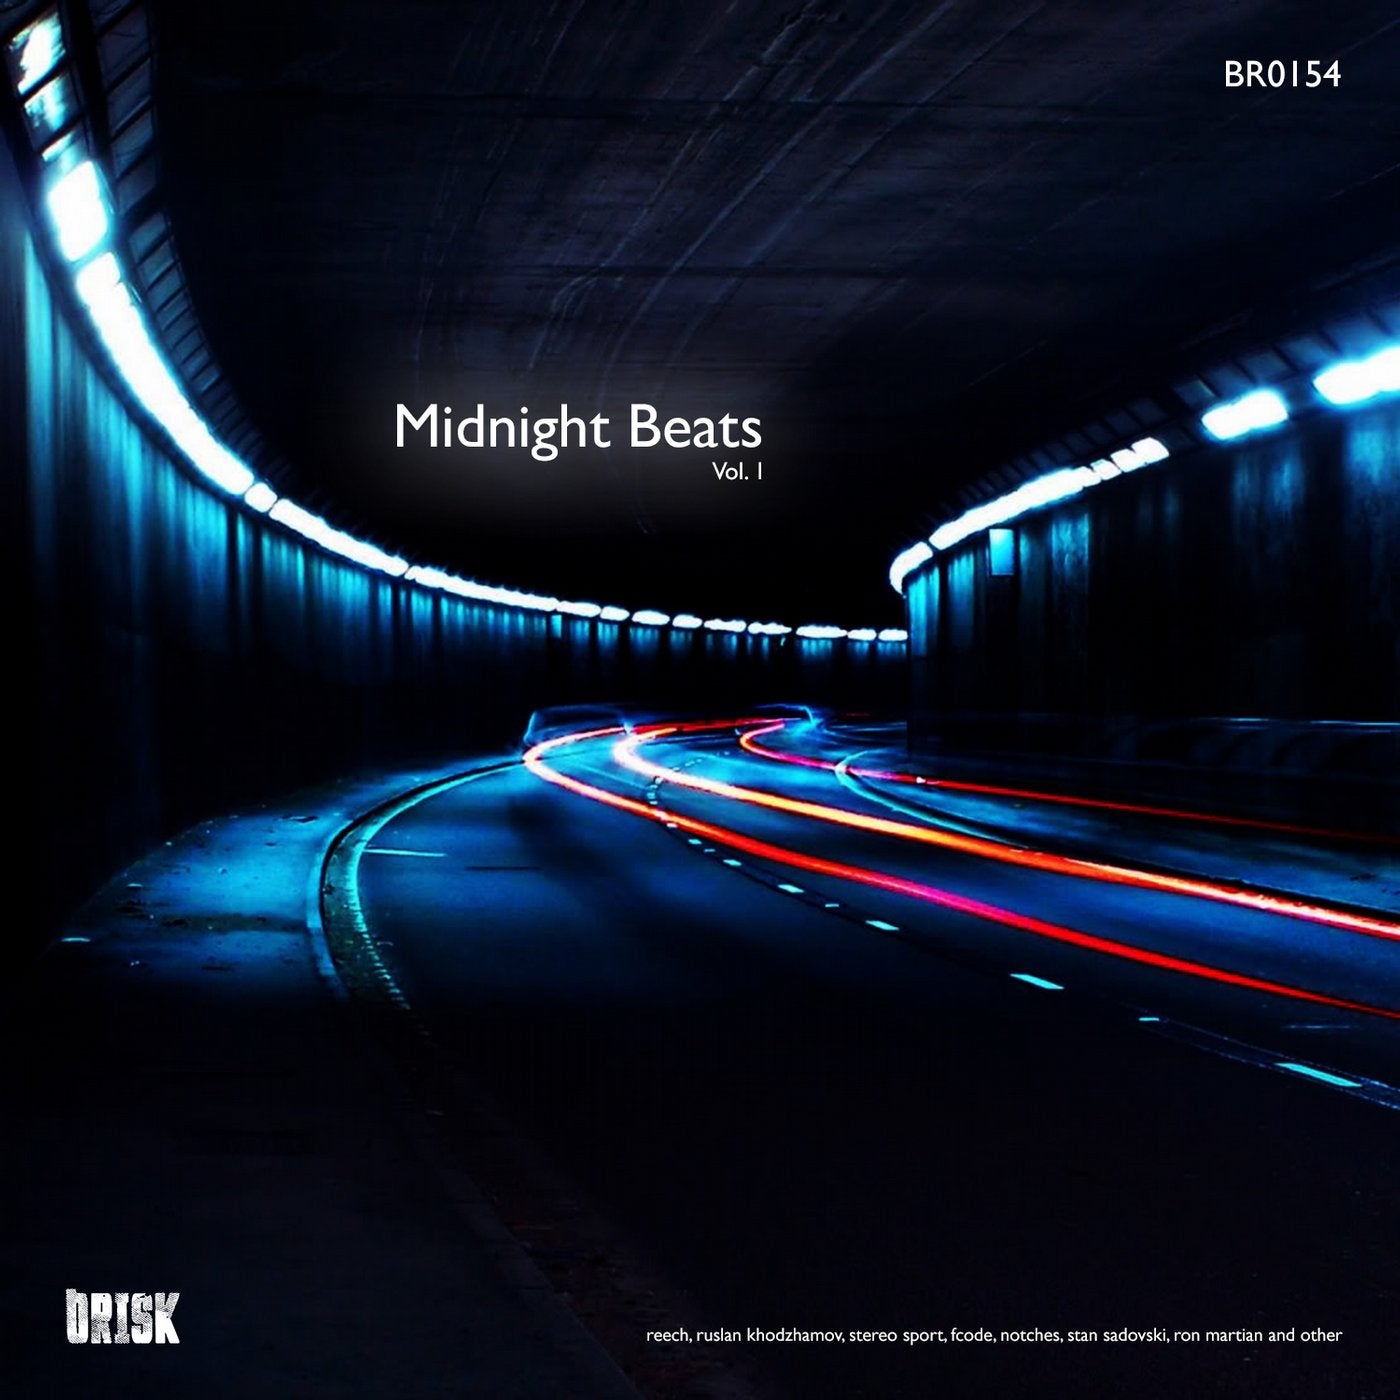 Midnight Beats Vol. 1